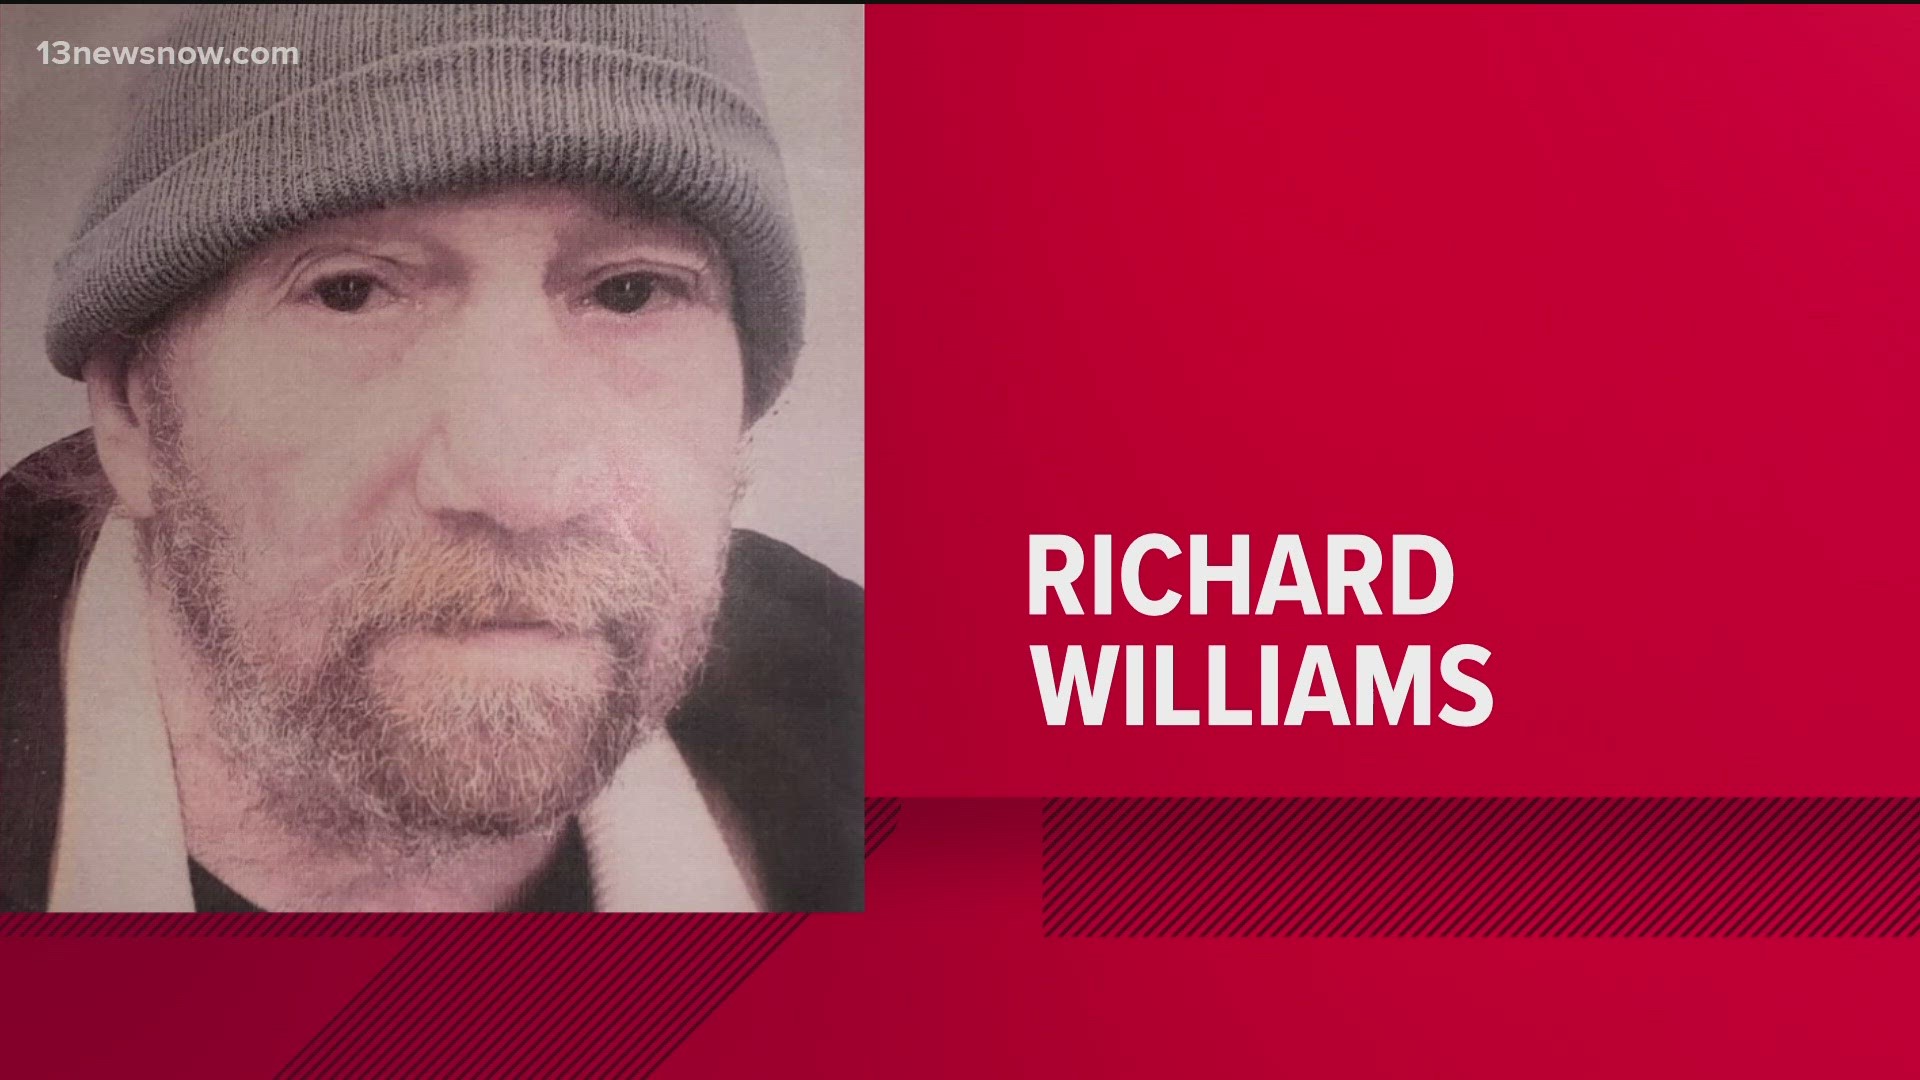 Richard Williams was last seen near the 600 block of 19th Street around 5 p.m. Monday, according to Newport News police.